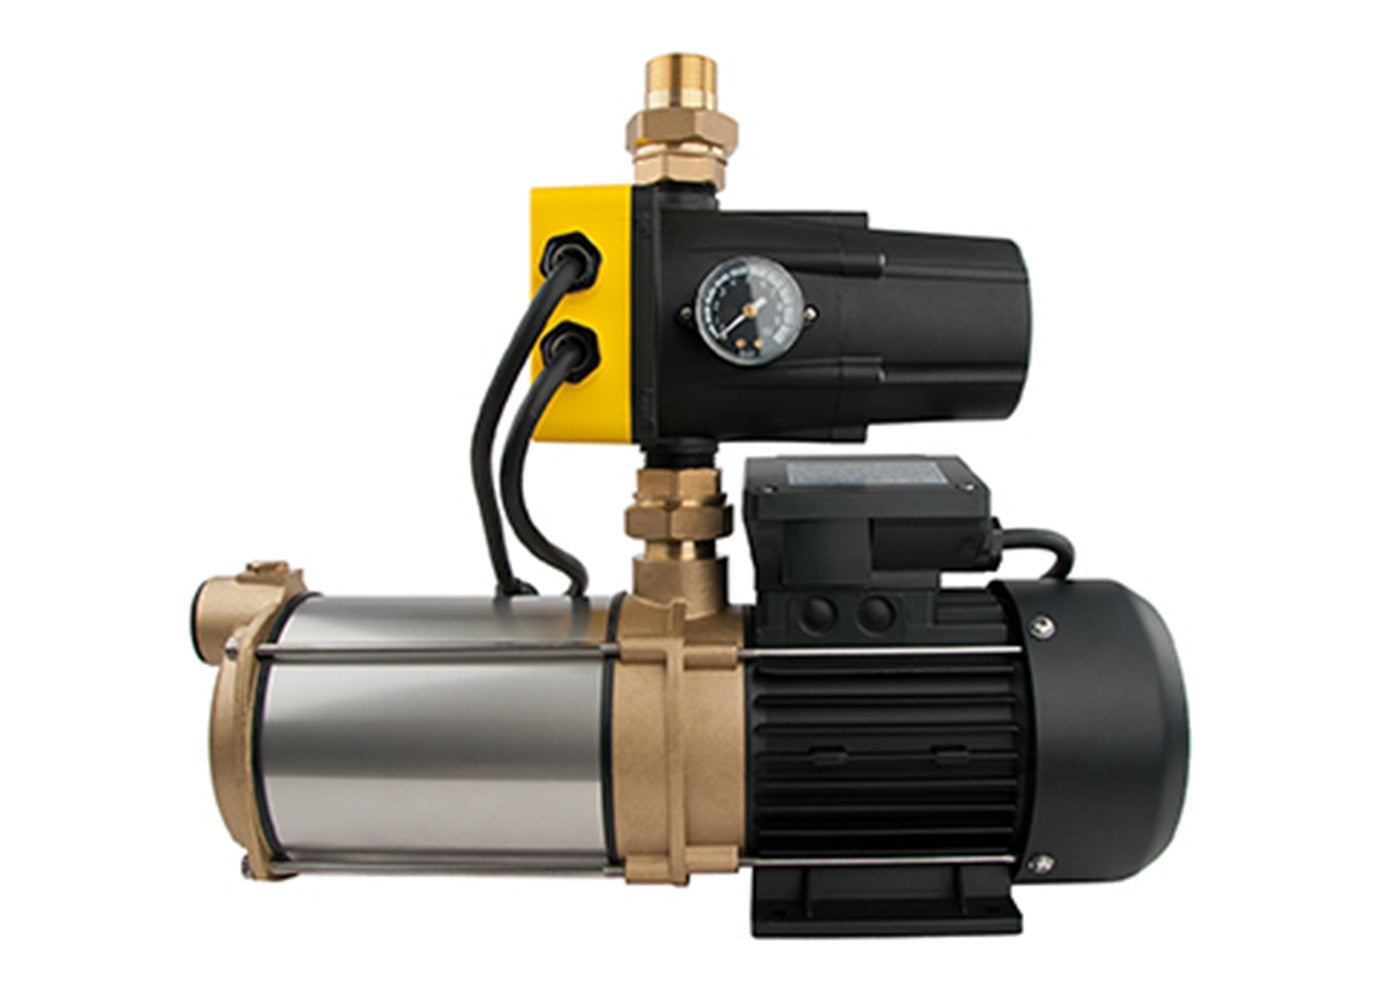 Hauswasserautomat CPS 25-5MB/Kit 05 OPTIMATIC für das Haus